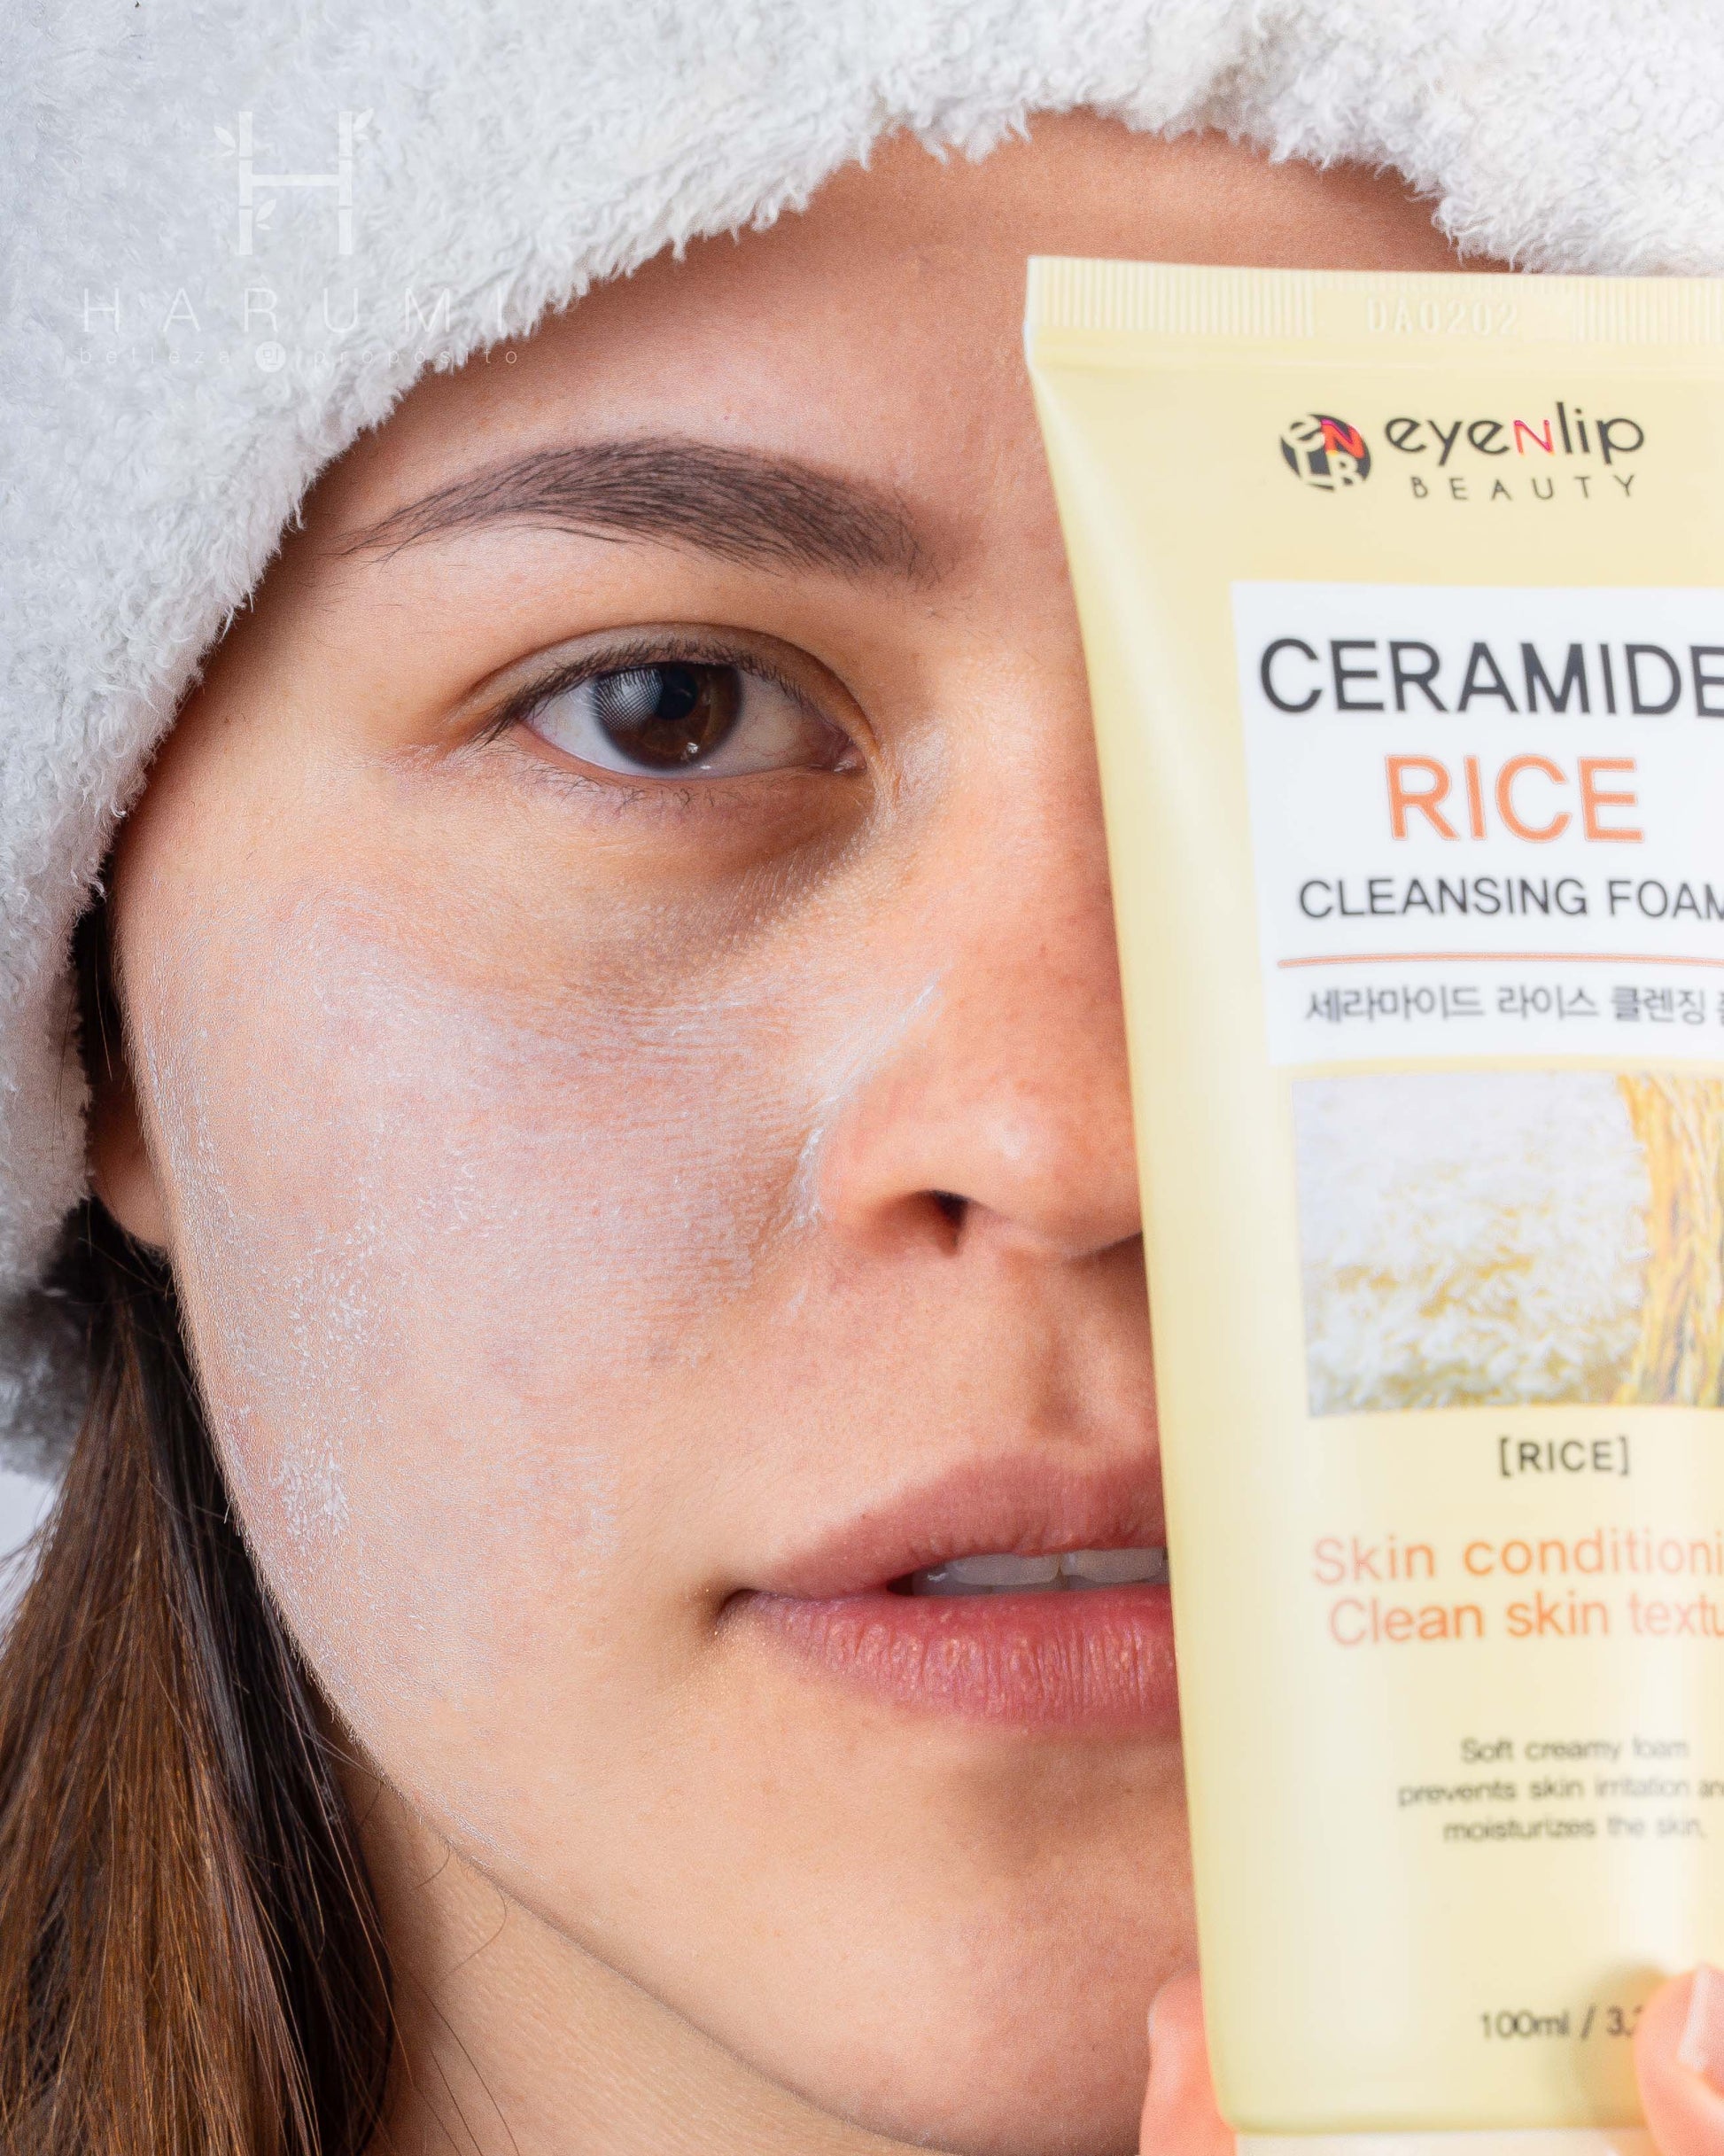 Eyenlip Ceramide Rice Cleansing Foam Skincare maquillaje productos de belleza coreanos en Colombia kbeauty